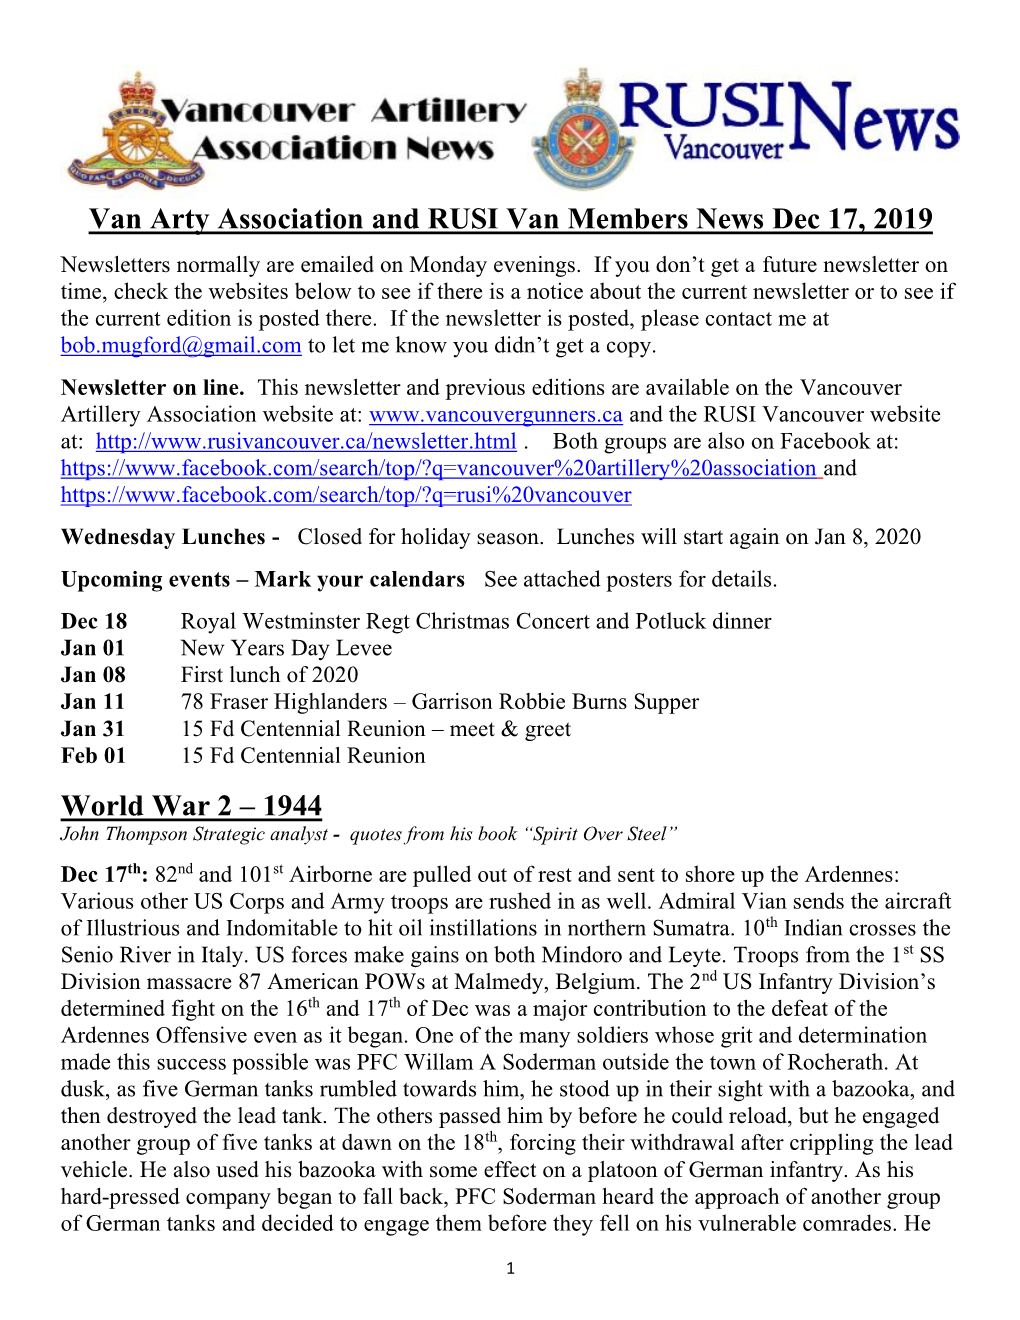 Van Arty Association and RUSI Van Members News Dec 17, 2019